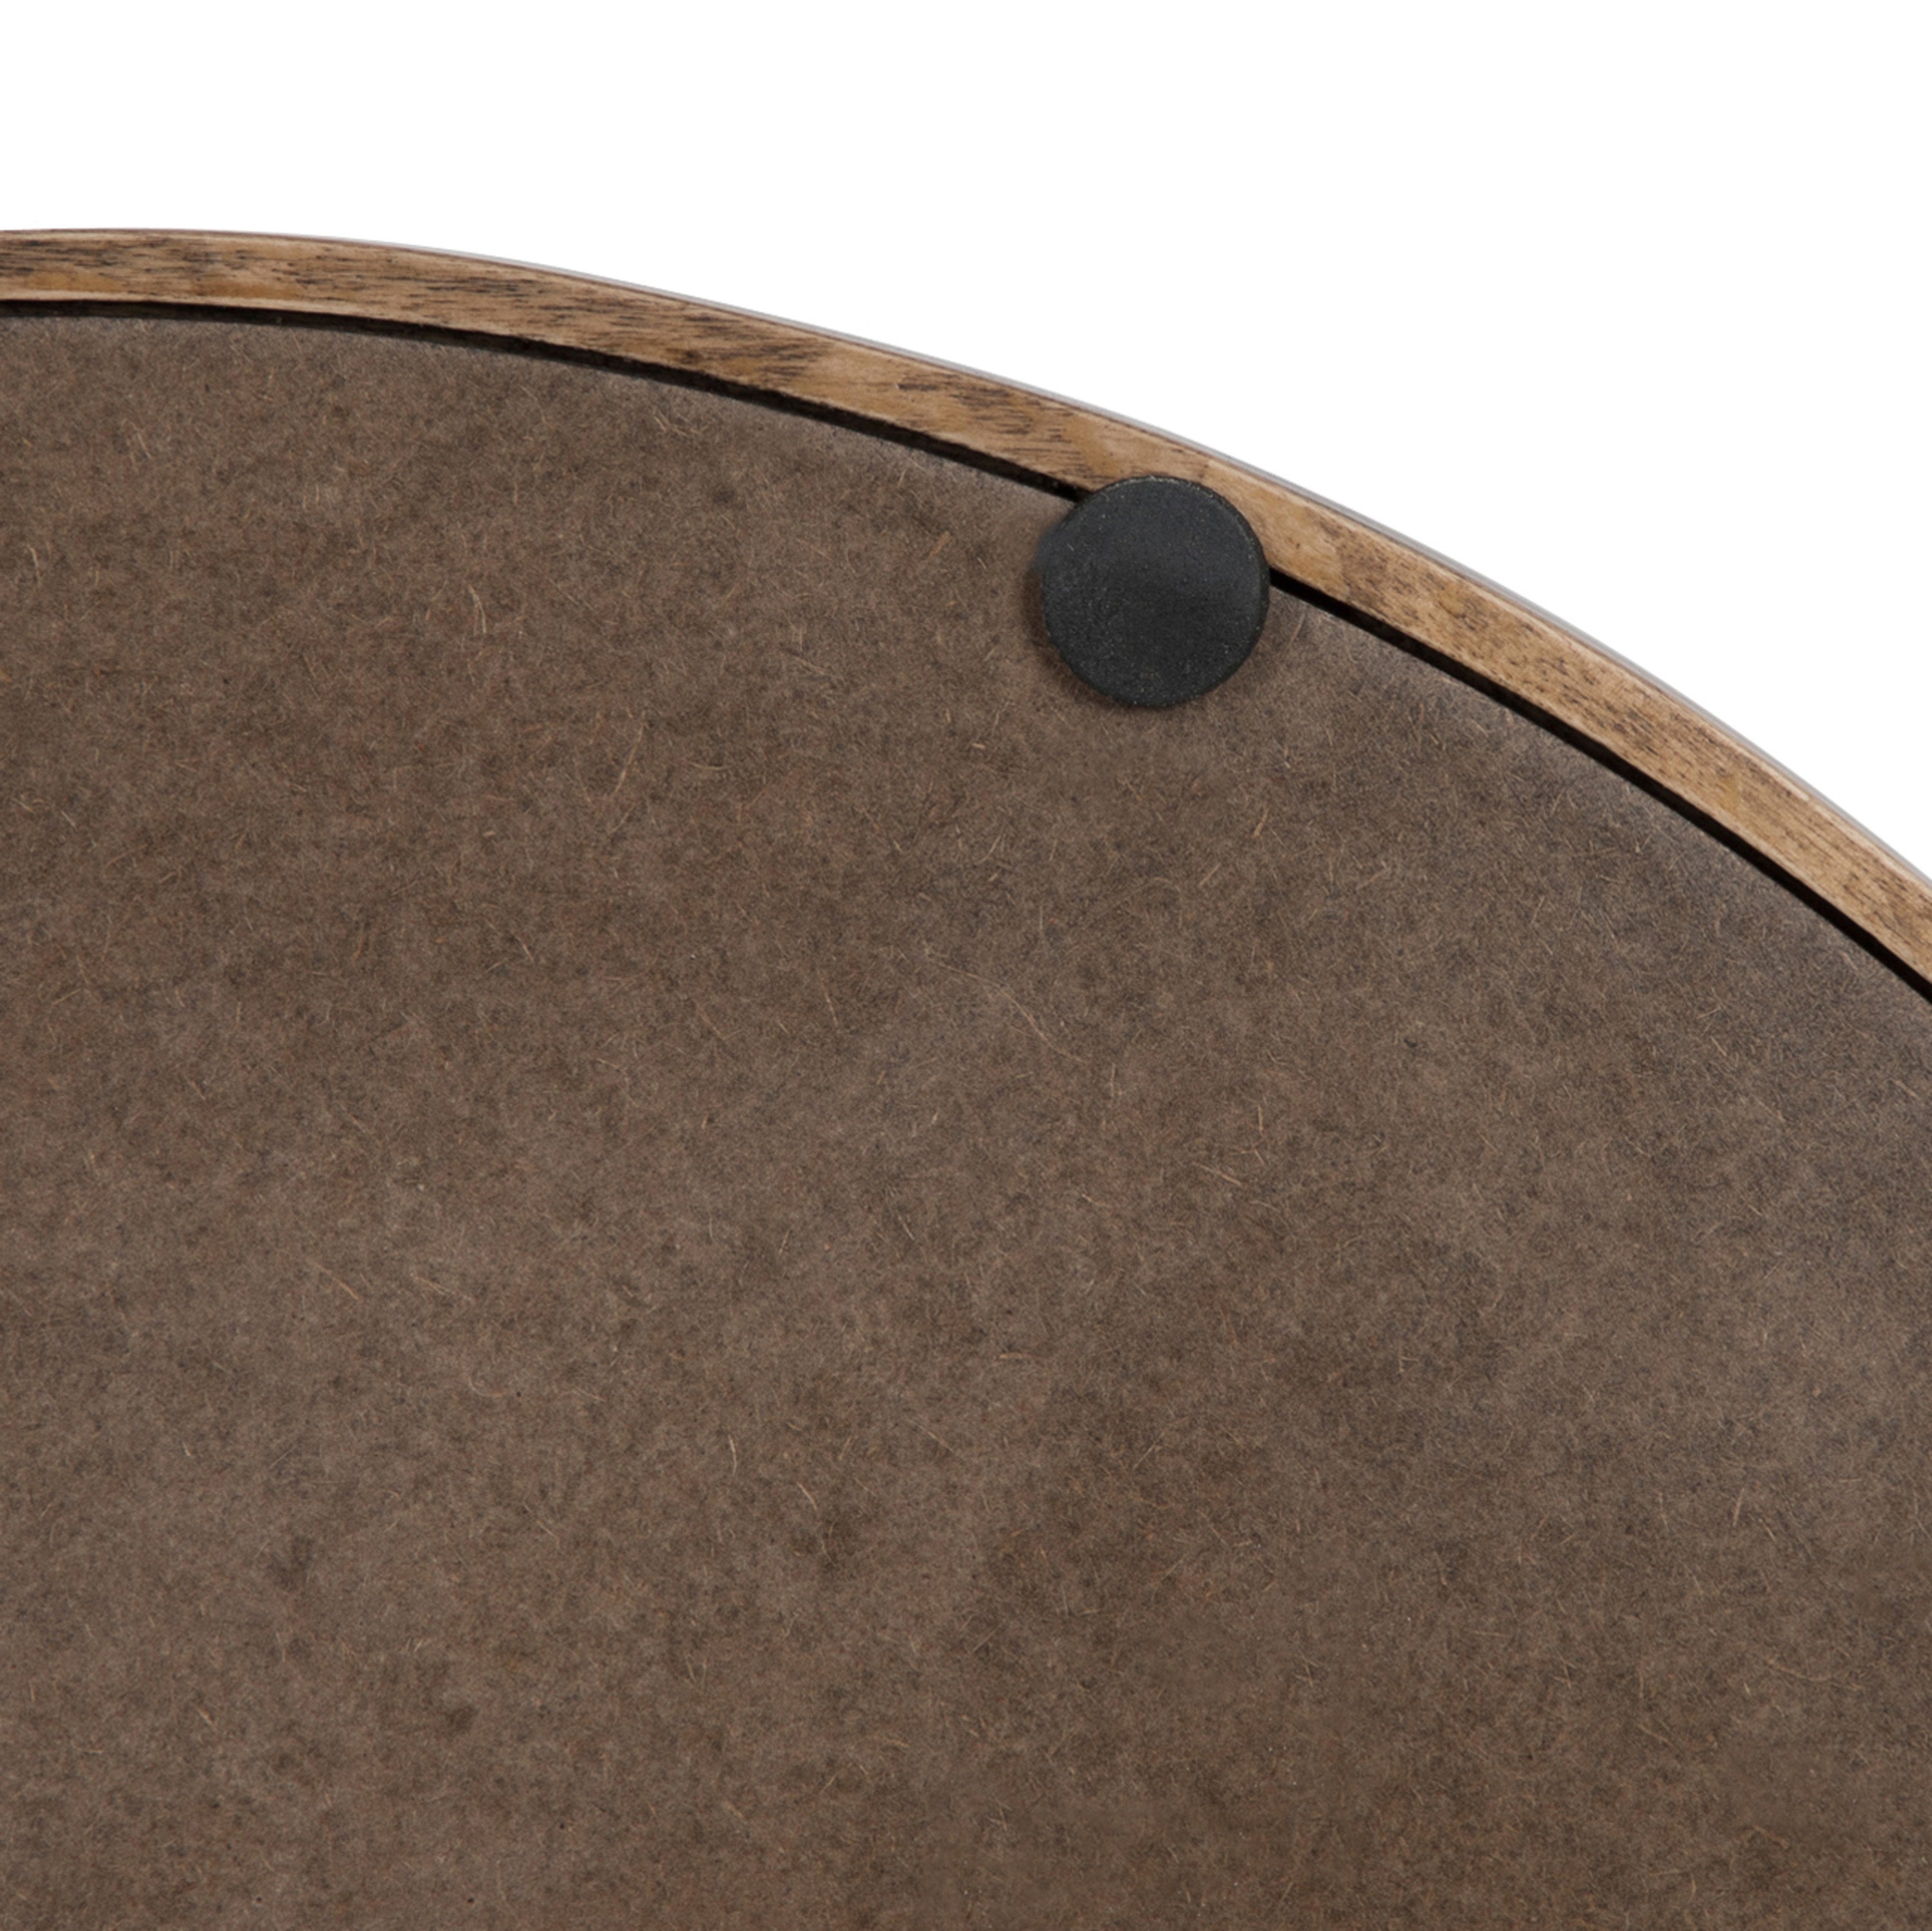 Lipton Round Decorative Tray with Metal Handles